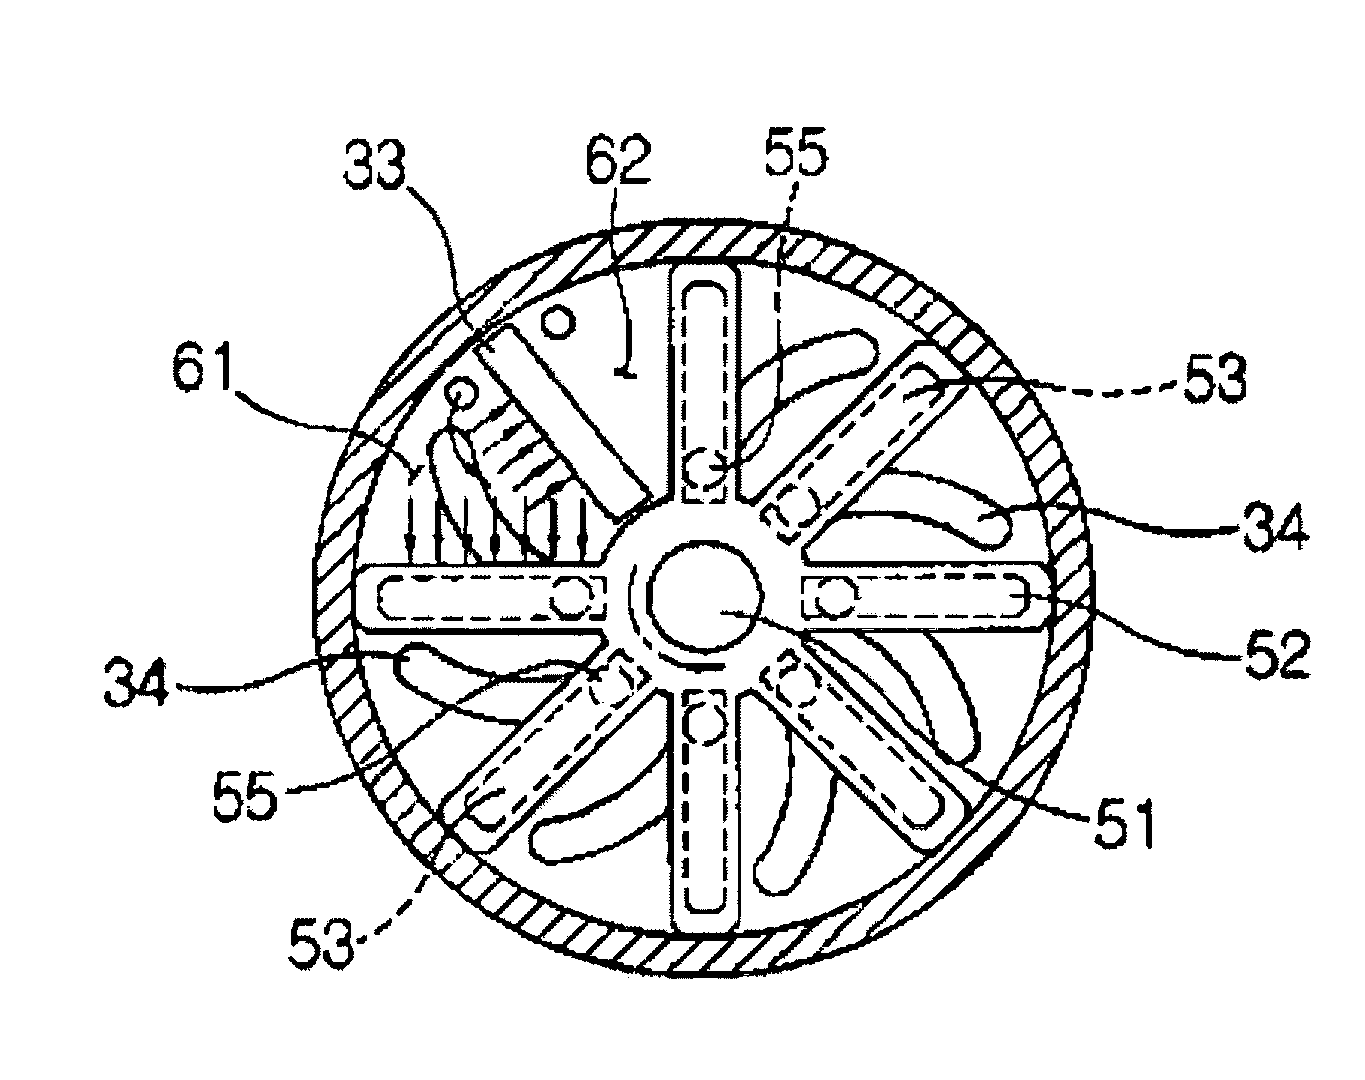 Variable inertia flywheel apparatus